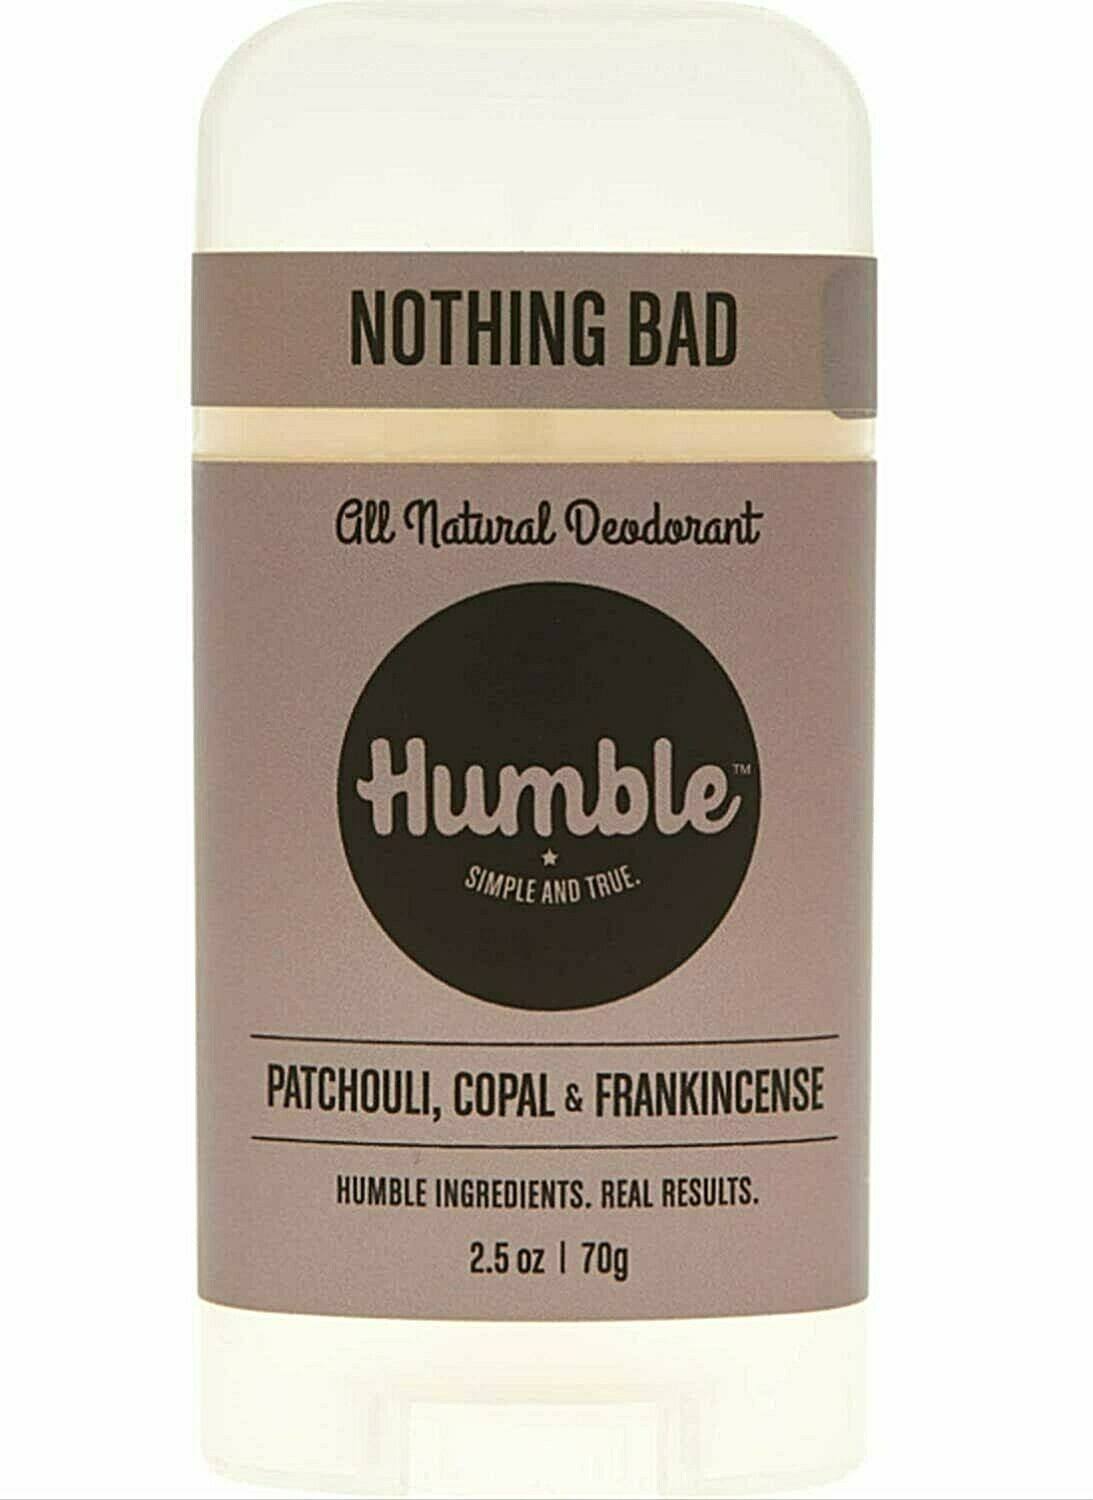 Humble Natural Deodorant - Patchouli, Copal and Frankincense, 2.5oz